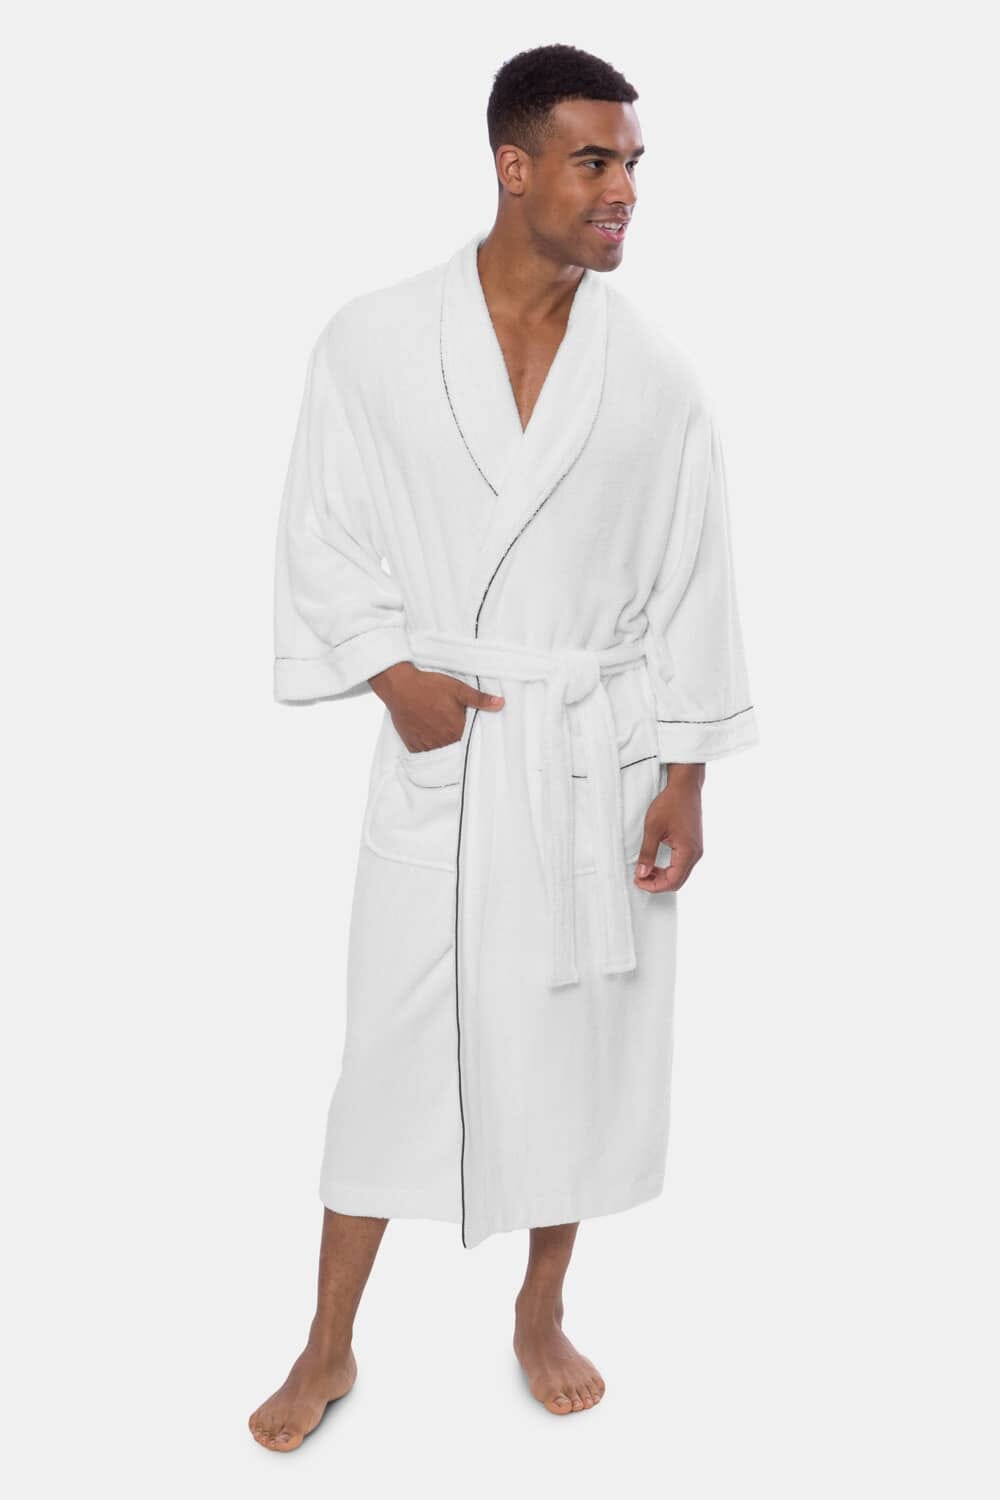 Texere Men's Terry Cloth Bathrobe Mens>Sleepwear>Robe Fishers Finery White S/M 